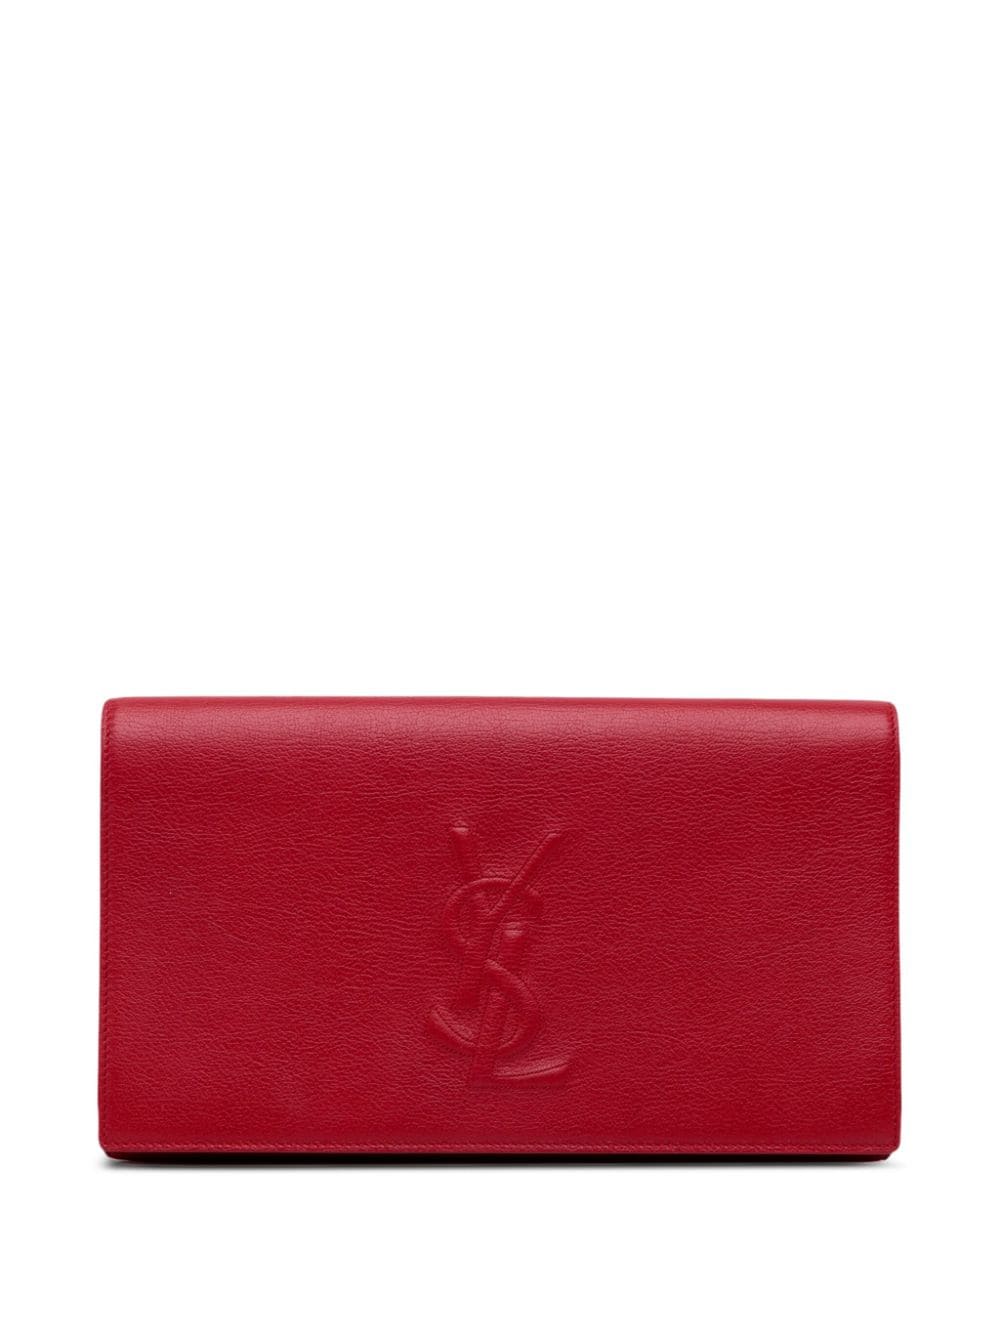 Pre-owned Saint Laurent 2016 Belle De Jour Leather Clutch Bag In Red